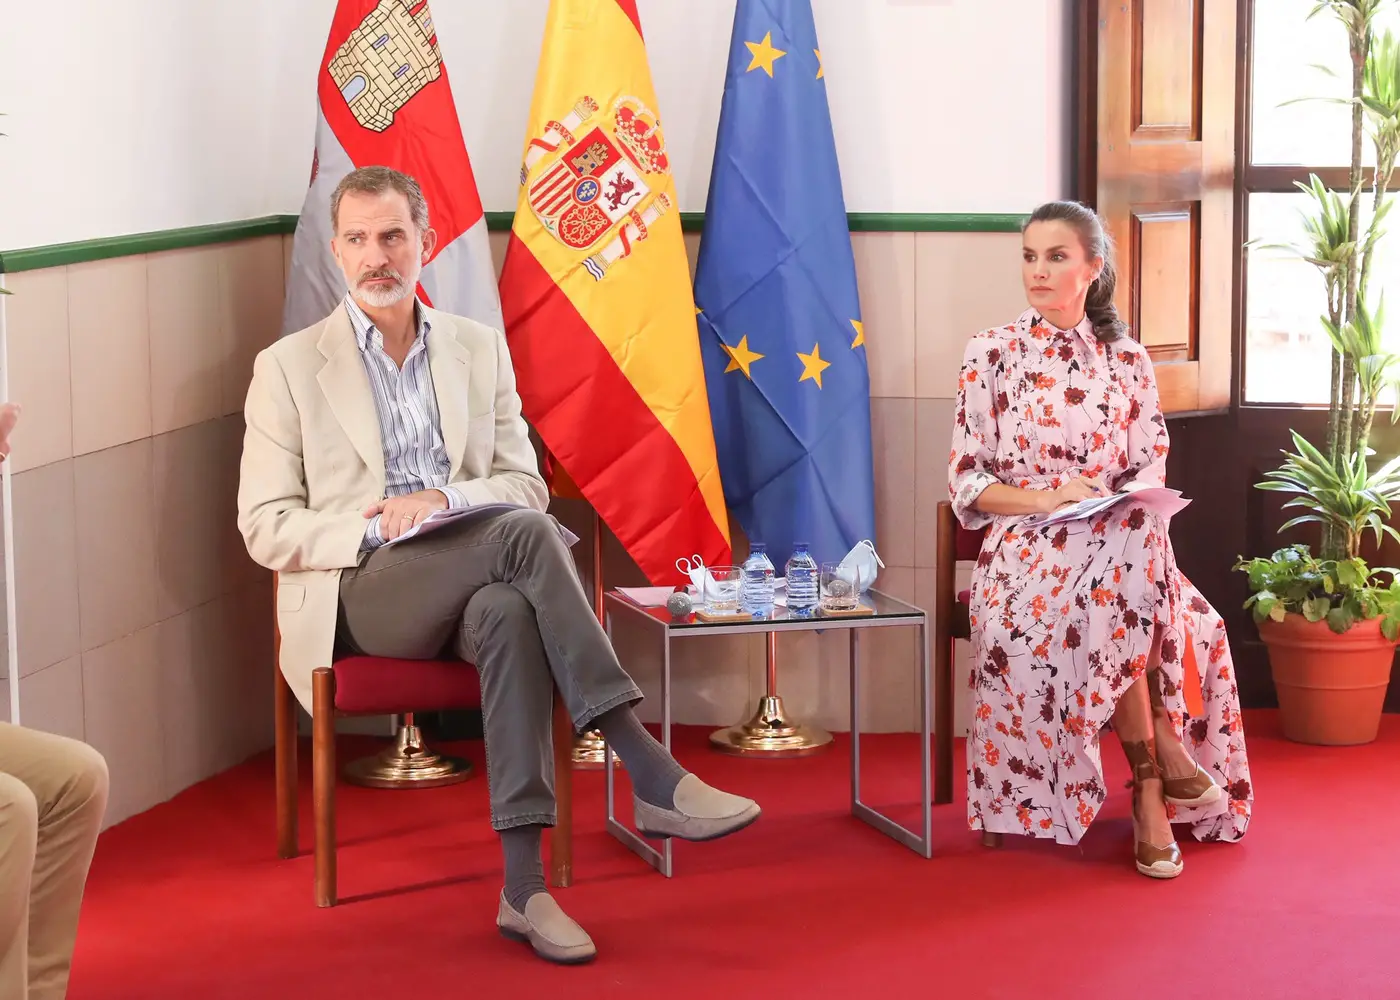 King Felipe and Queen Letizia of Spain held a meetin in Vinuesa